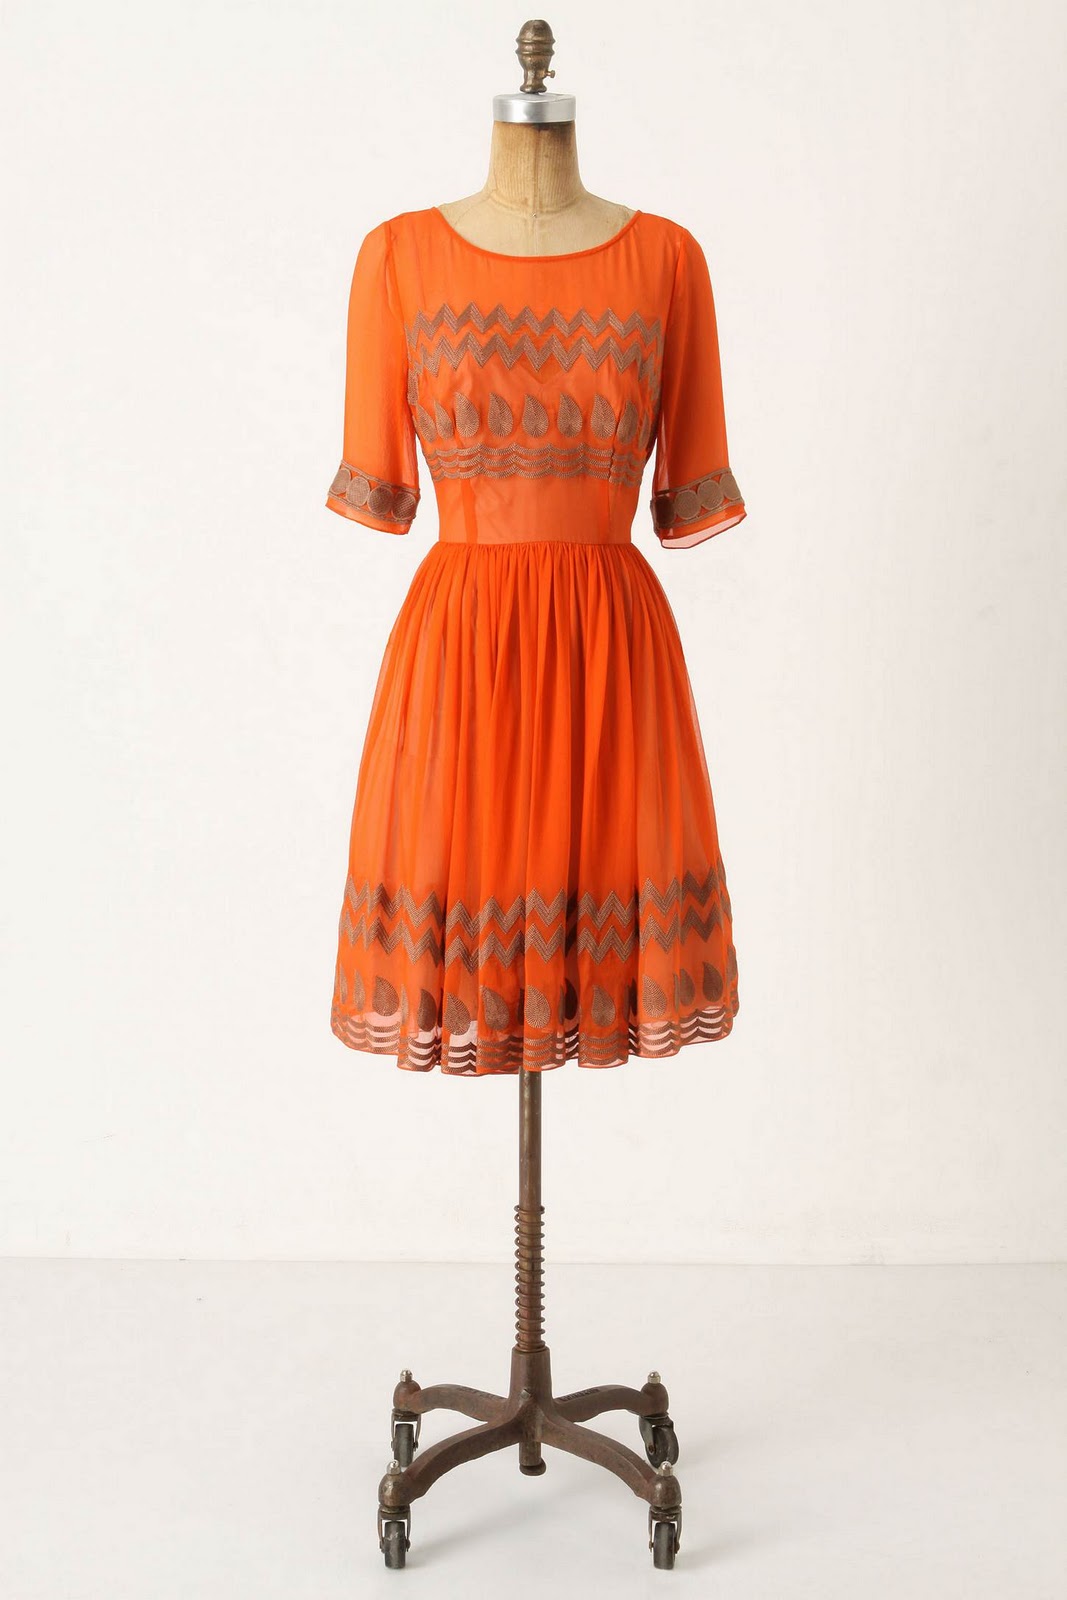 Guest post by Sarah: Anthropologie Tangerine Flicker Dress DIY